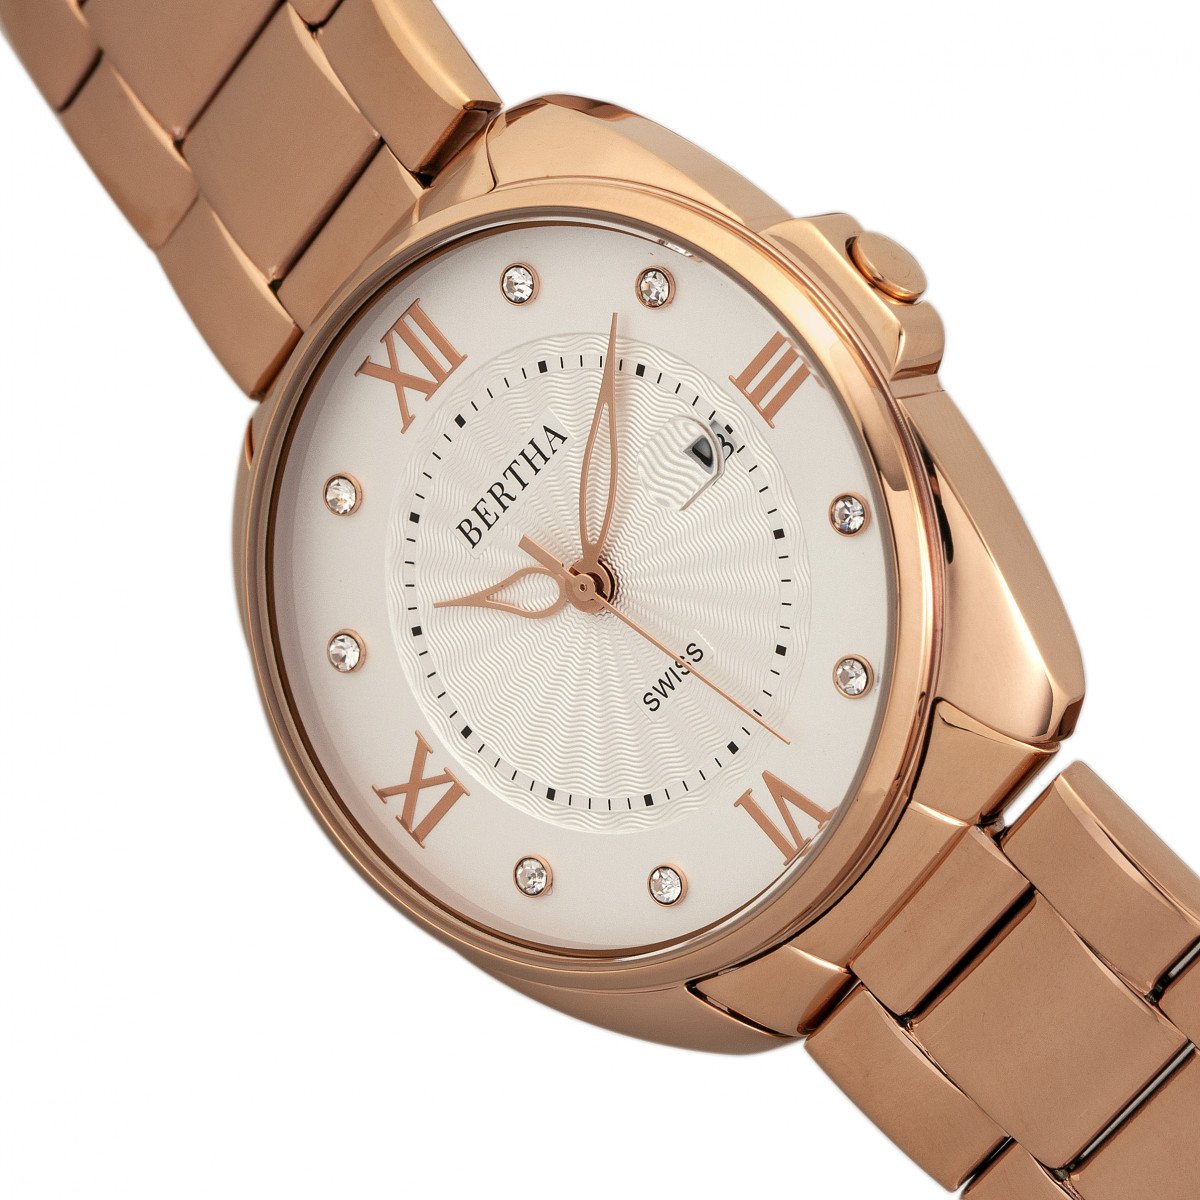 Bertha Amelia Bracelet Watch w/Date - Rose Gold - BTHBR6303